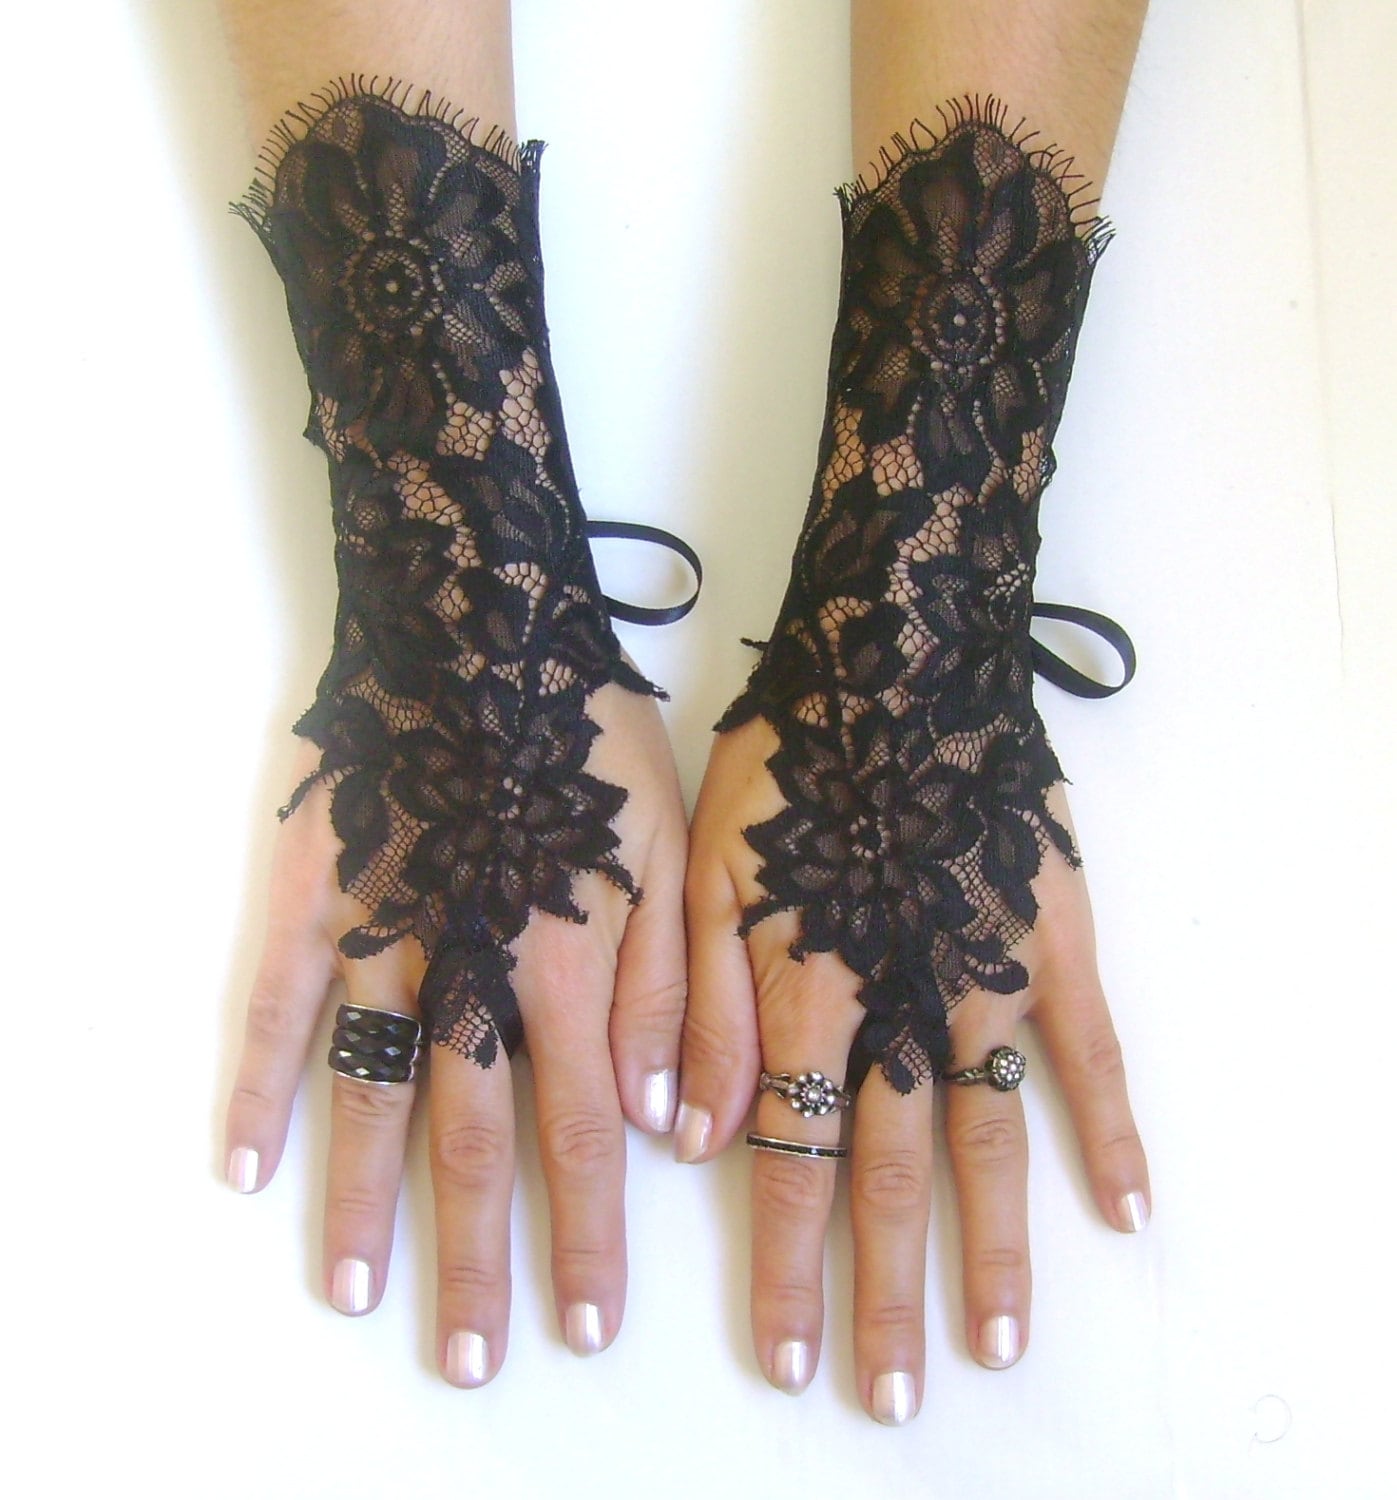 Black lace gloves french lace bridal wedding by GlovesByJana